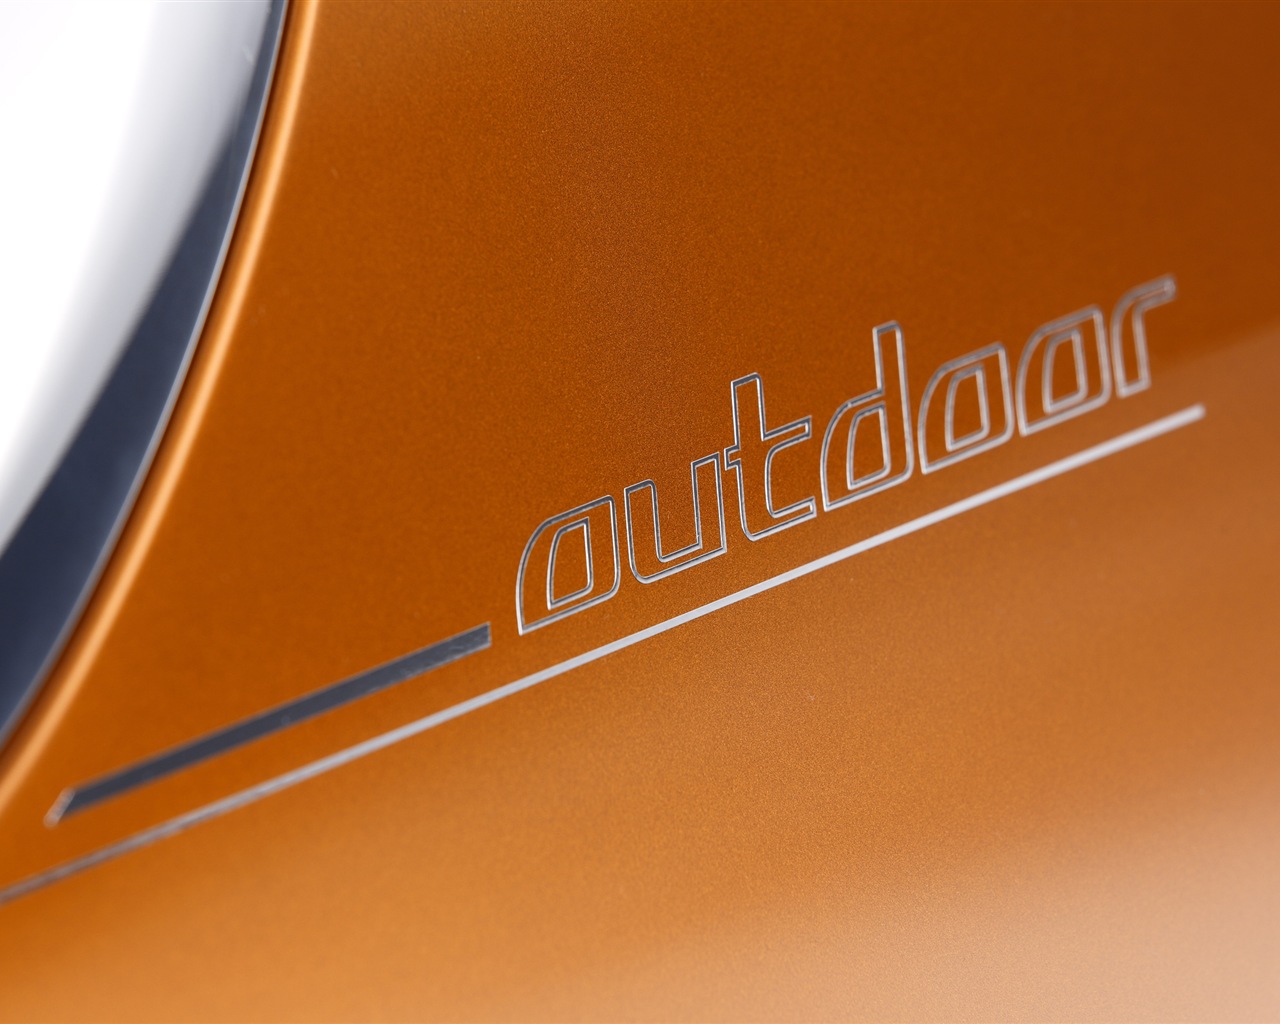 2013 BMW Concept actifs wallpapers HD Tourer #17 - 1280x1024